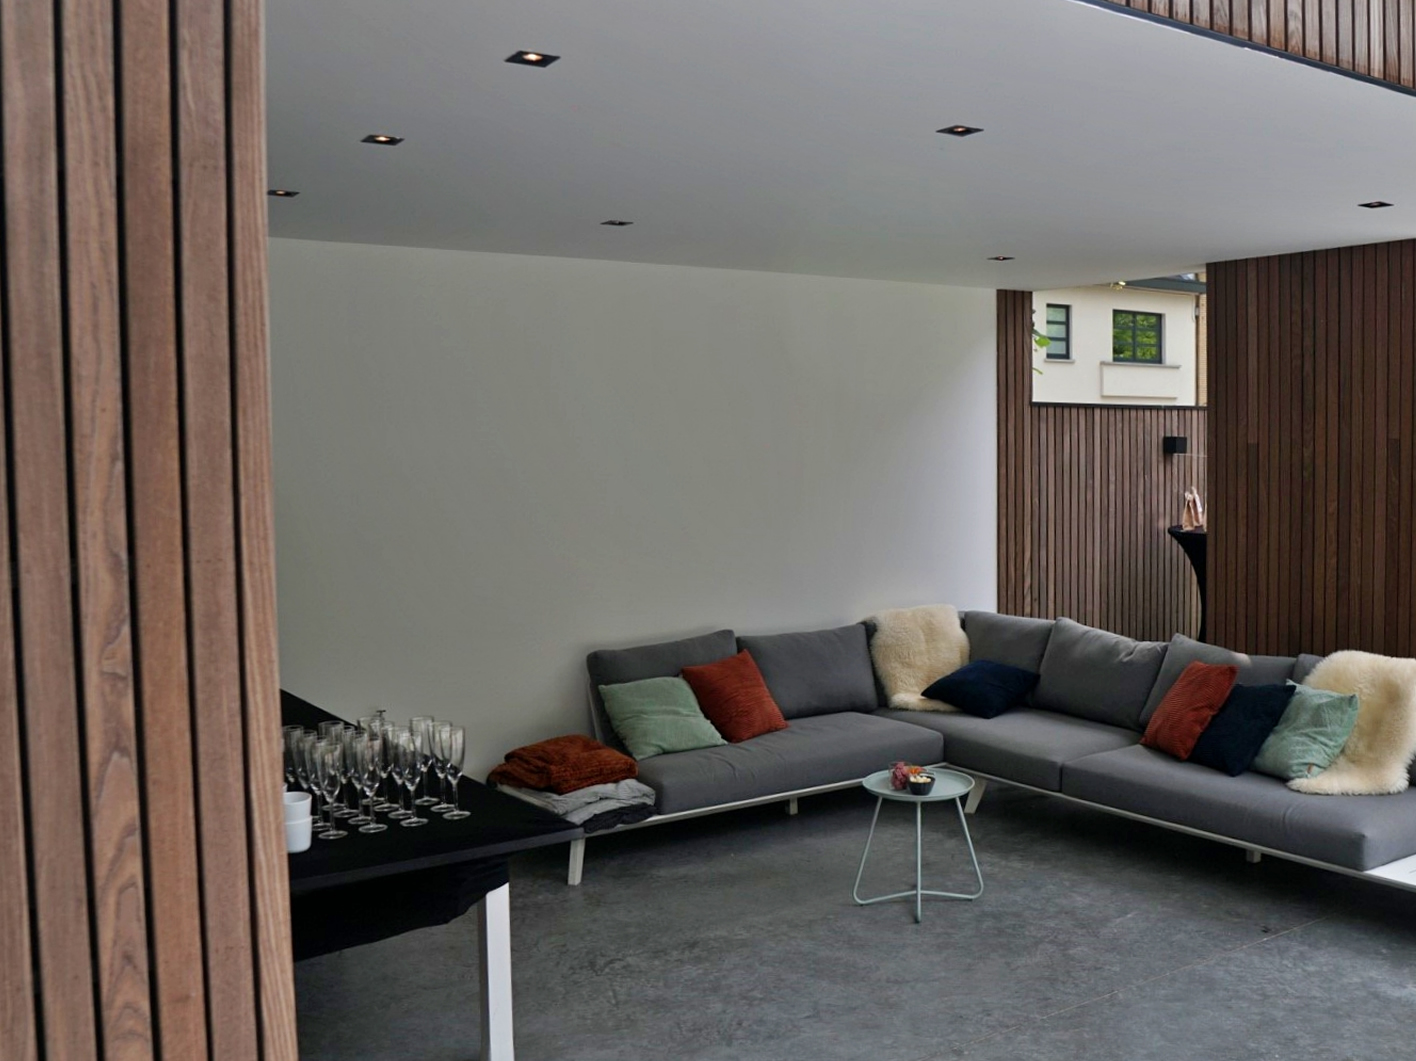 Terras van moderne poolhouse in padoek aangekleed met meubelen en bar regio Gent